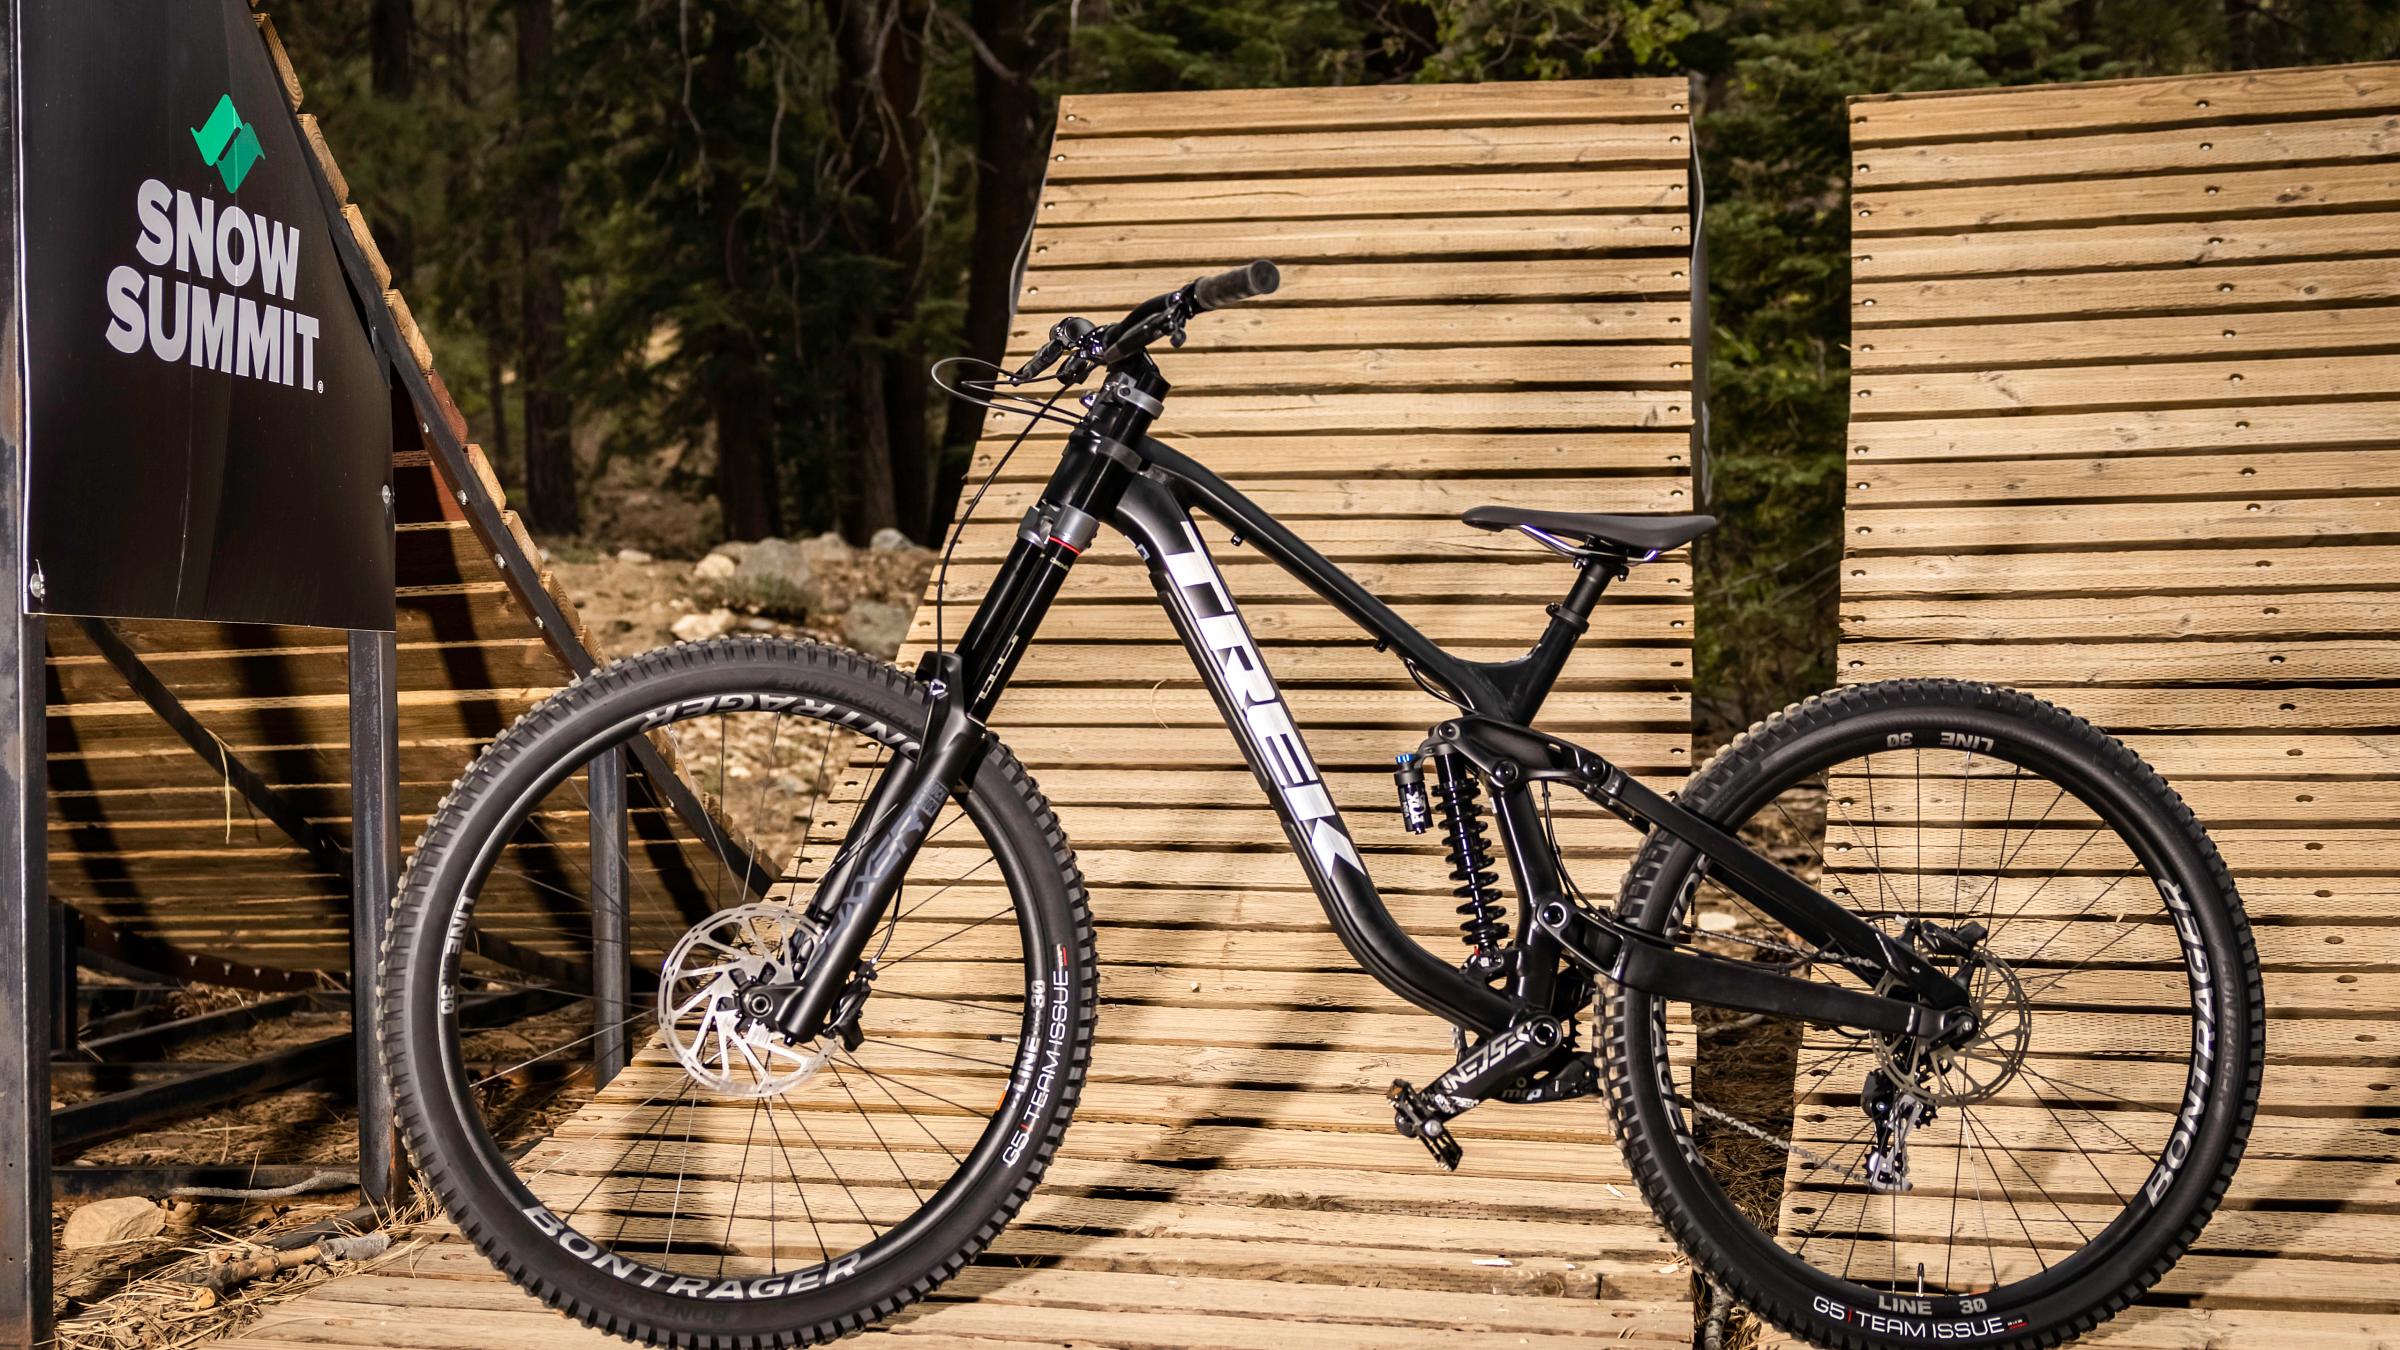 Black mountain bike sitting on a wooden ramp